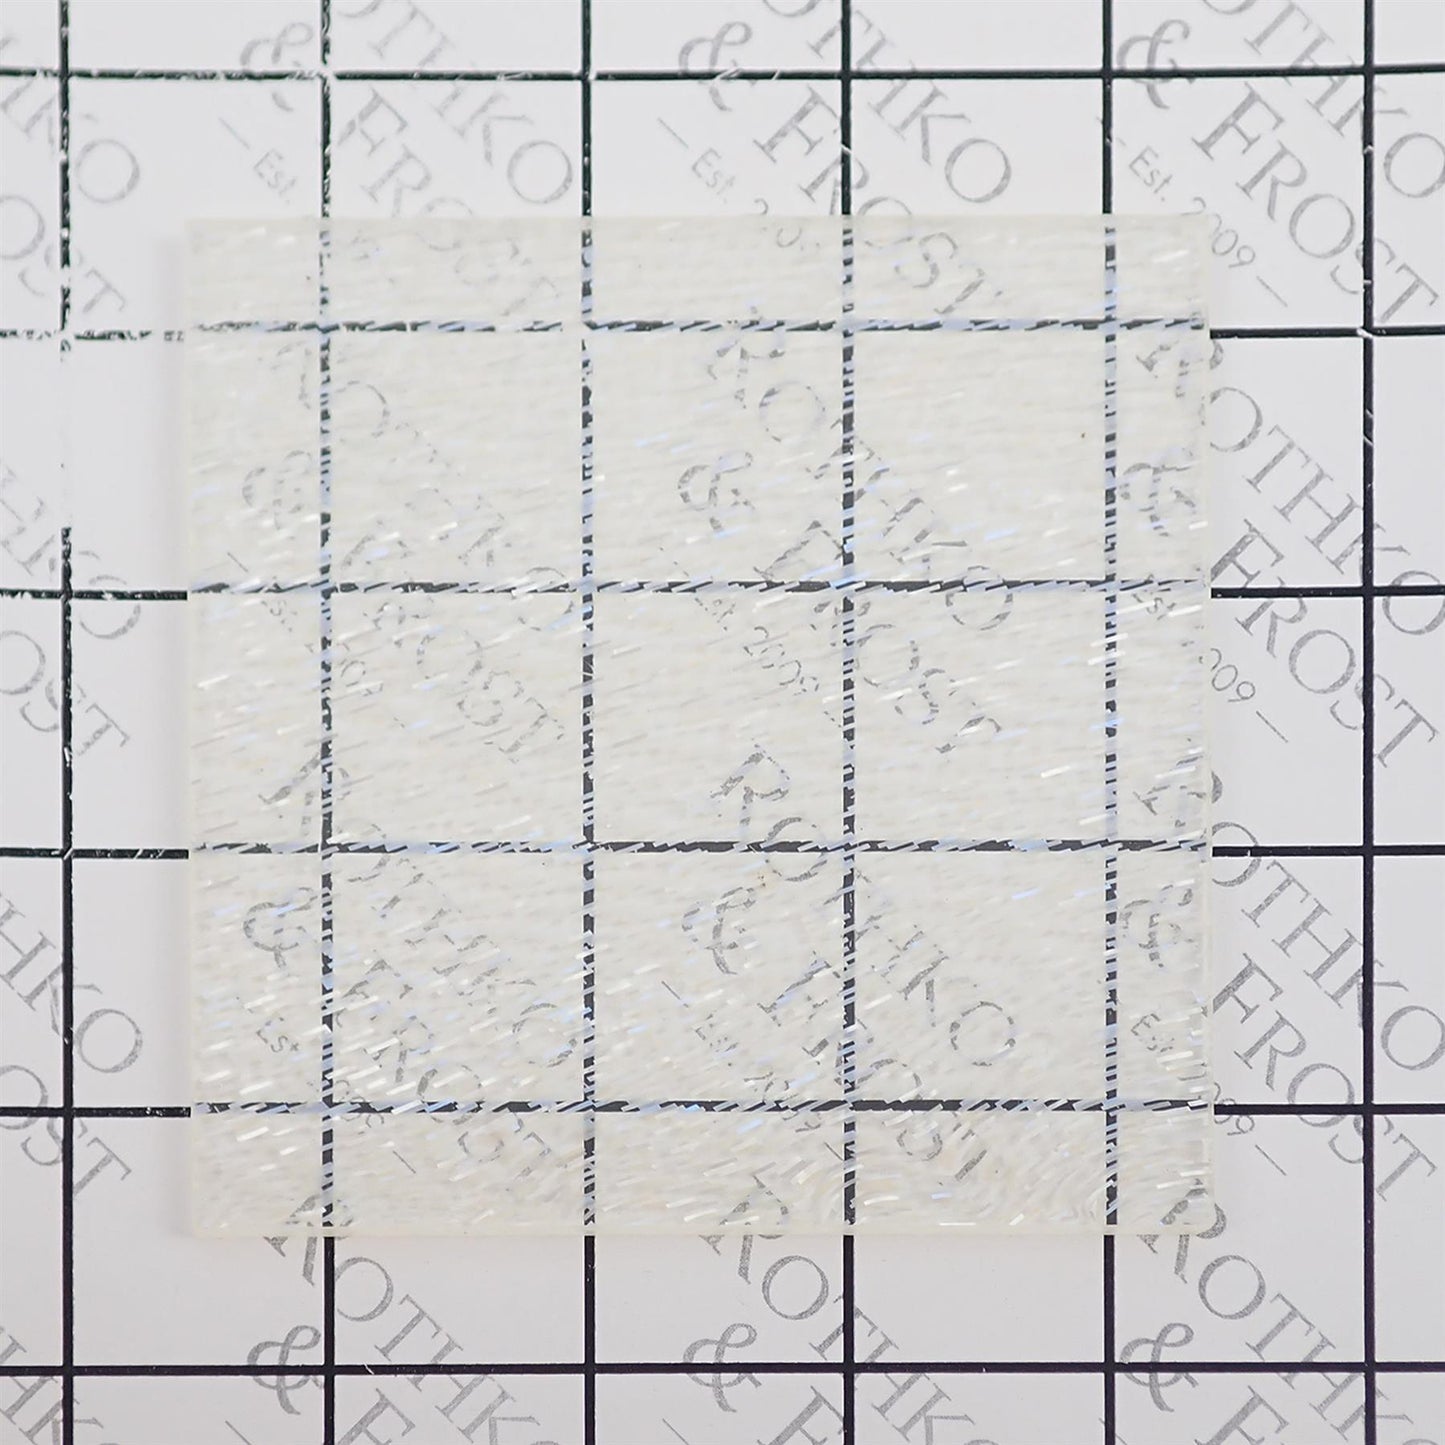 Incudo White Confetti Celluloid Laminate Acrylic Sheet - 300x200x3mm (11.8x7.87x0.12")